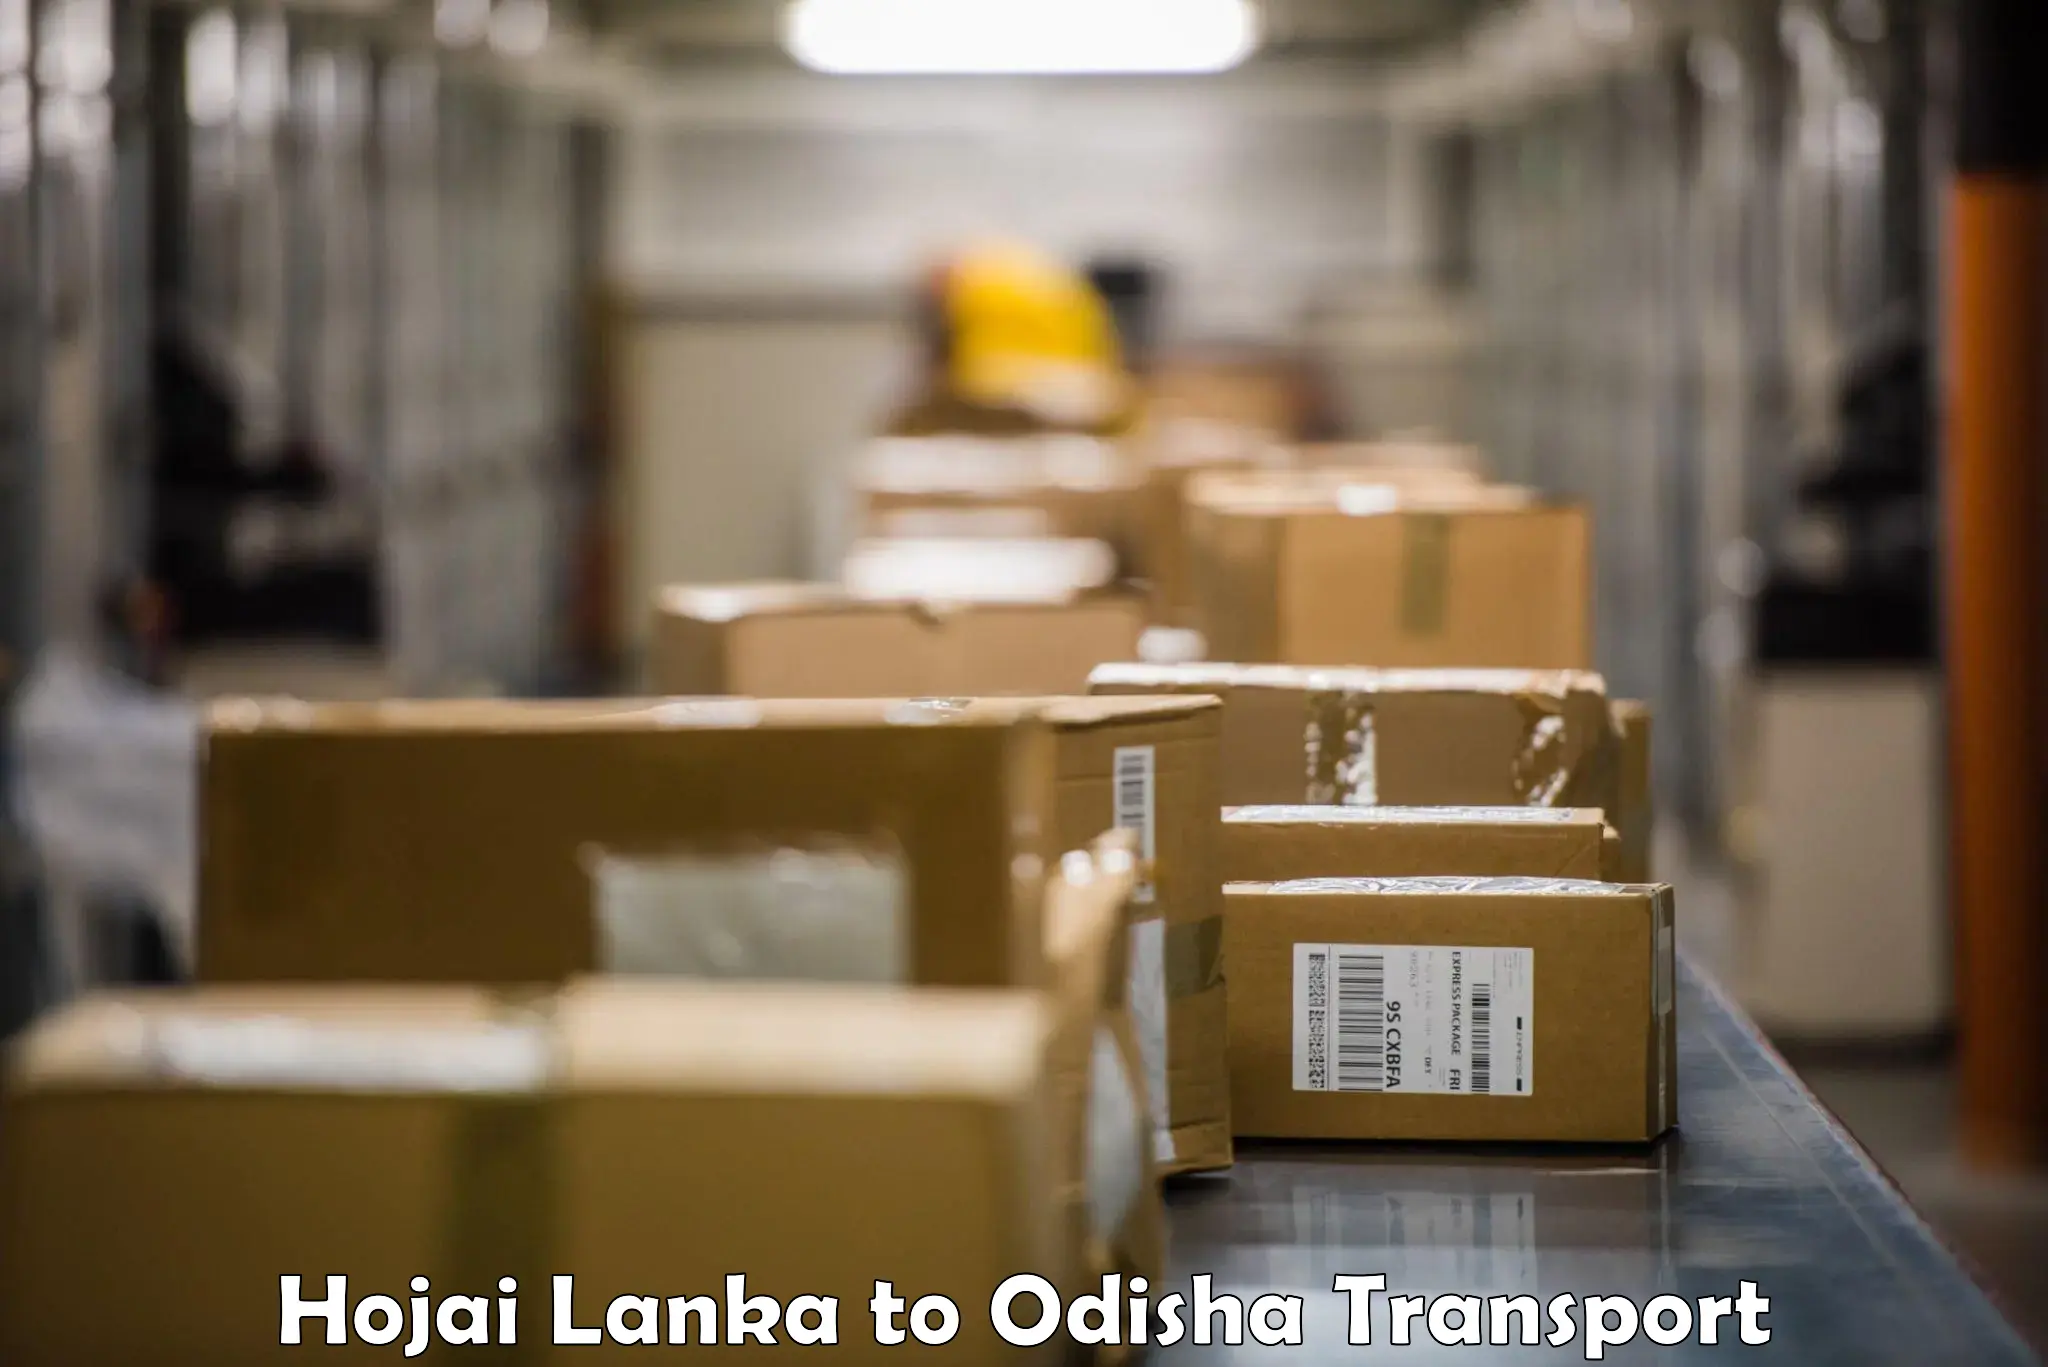 Transport shared services in Hojai Lanka to Melchhamunda